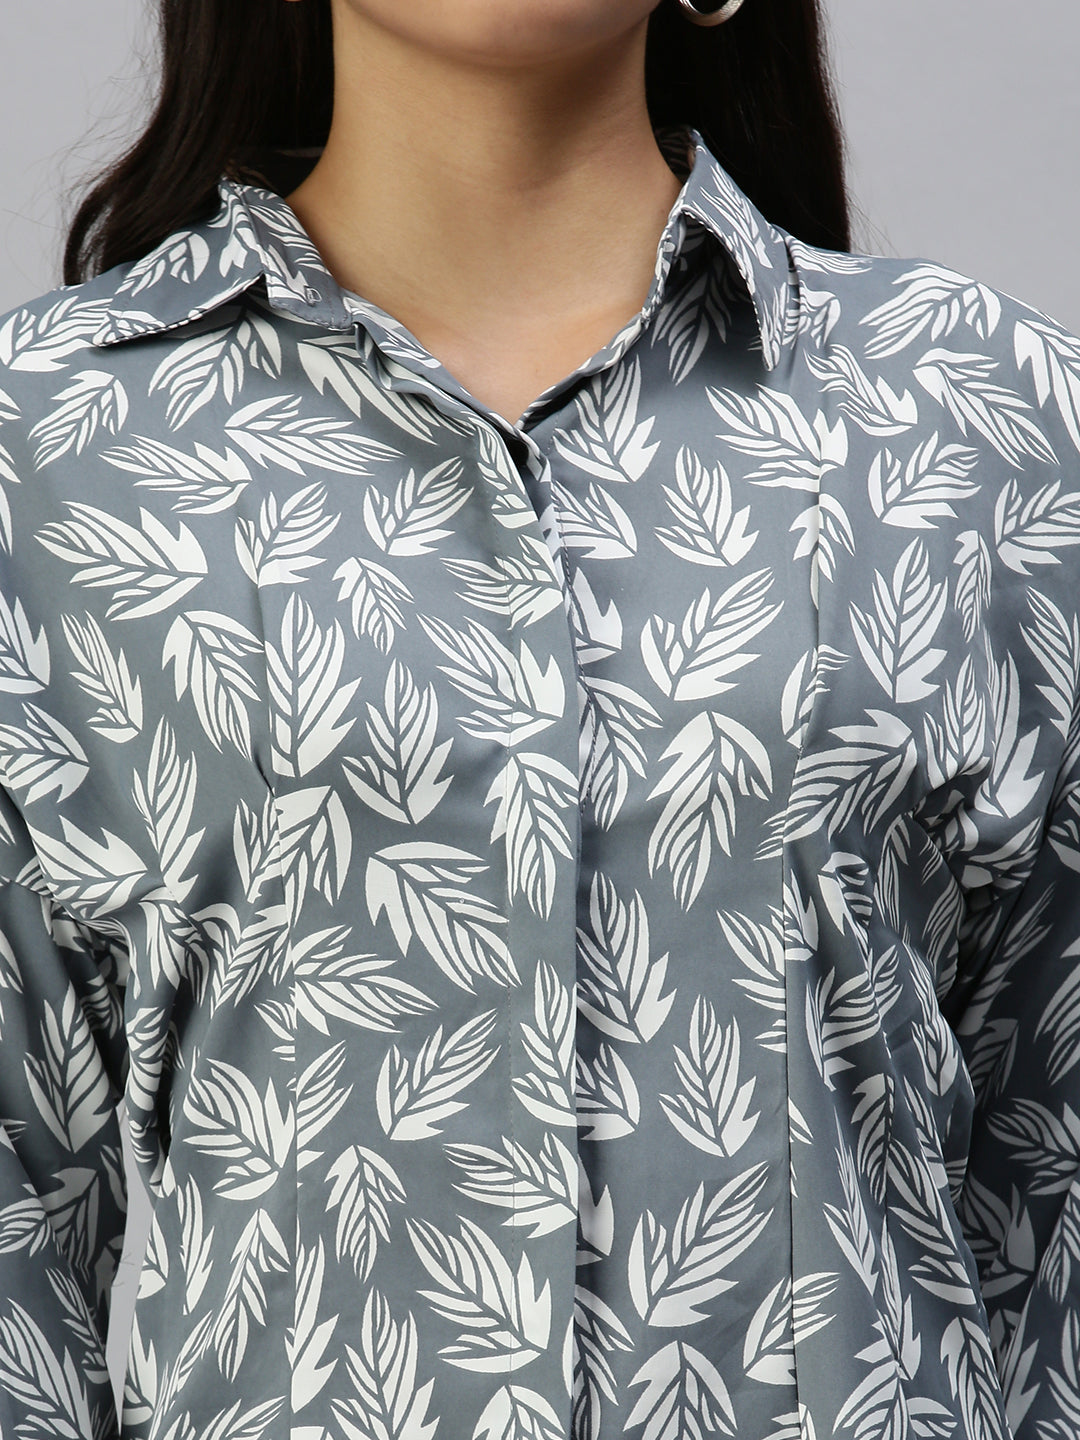 Women's Grey Printed Shirt